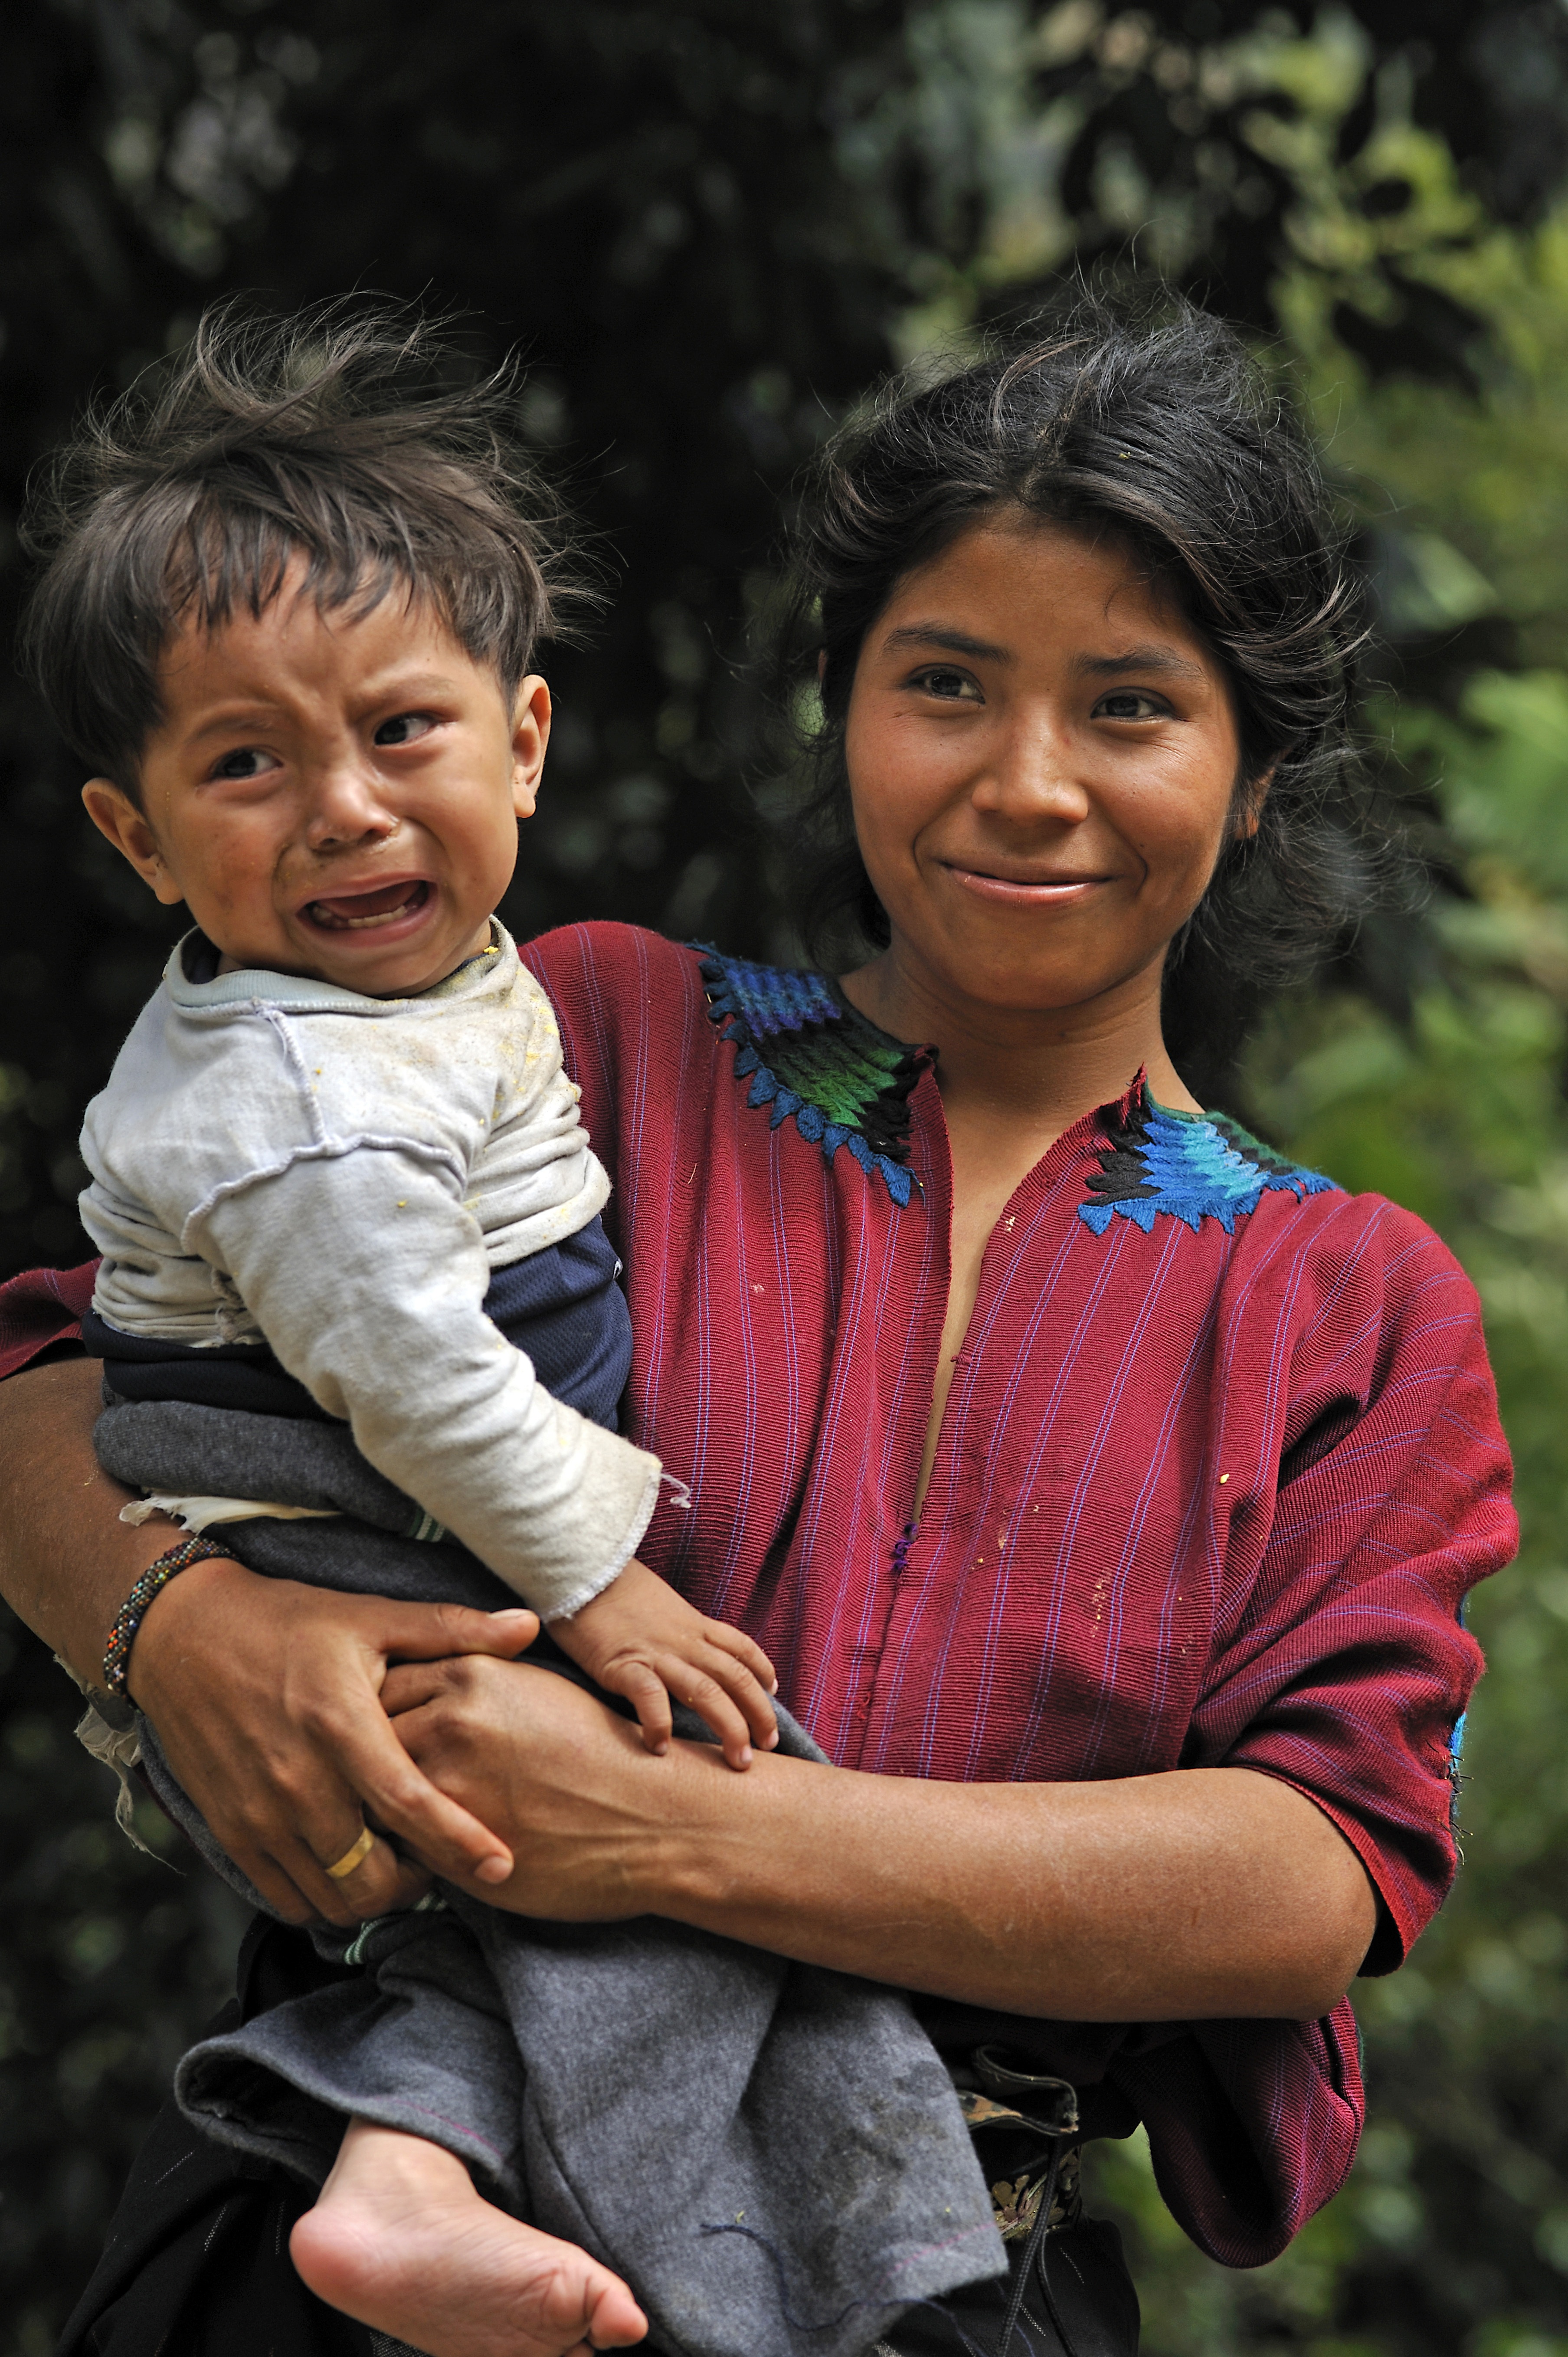 Teenage motherhood is not unusual in Guatemala.